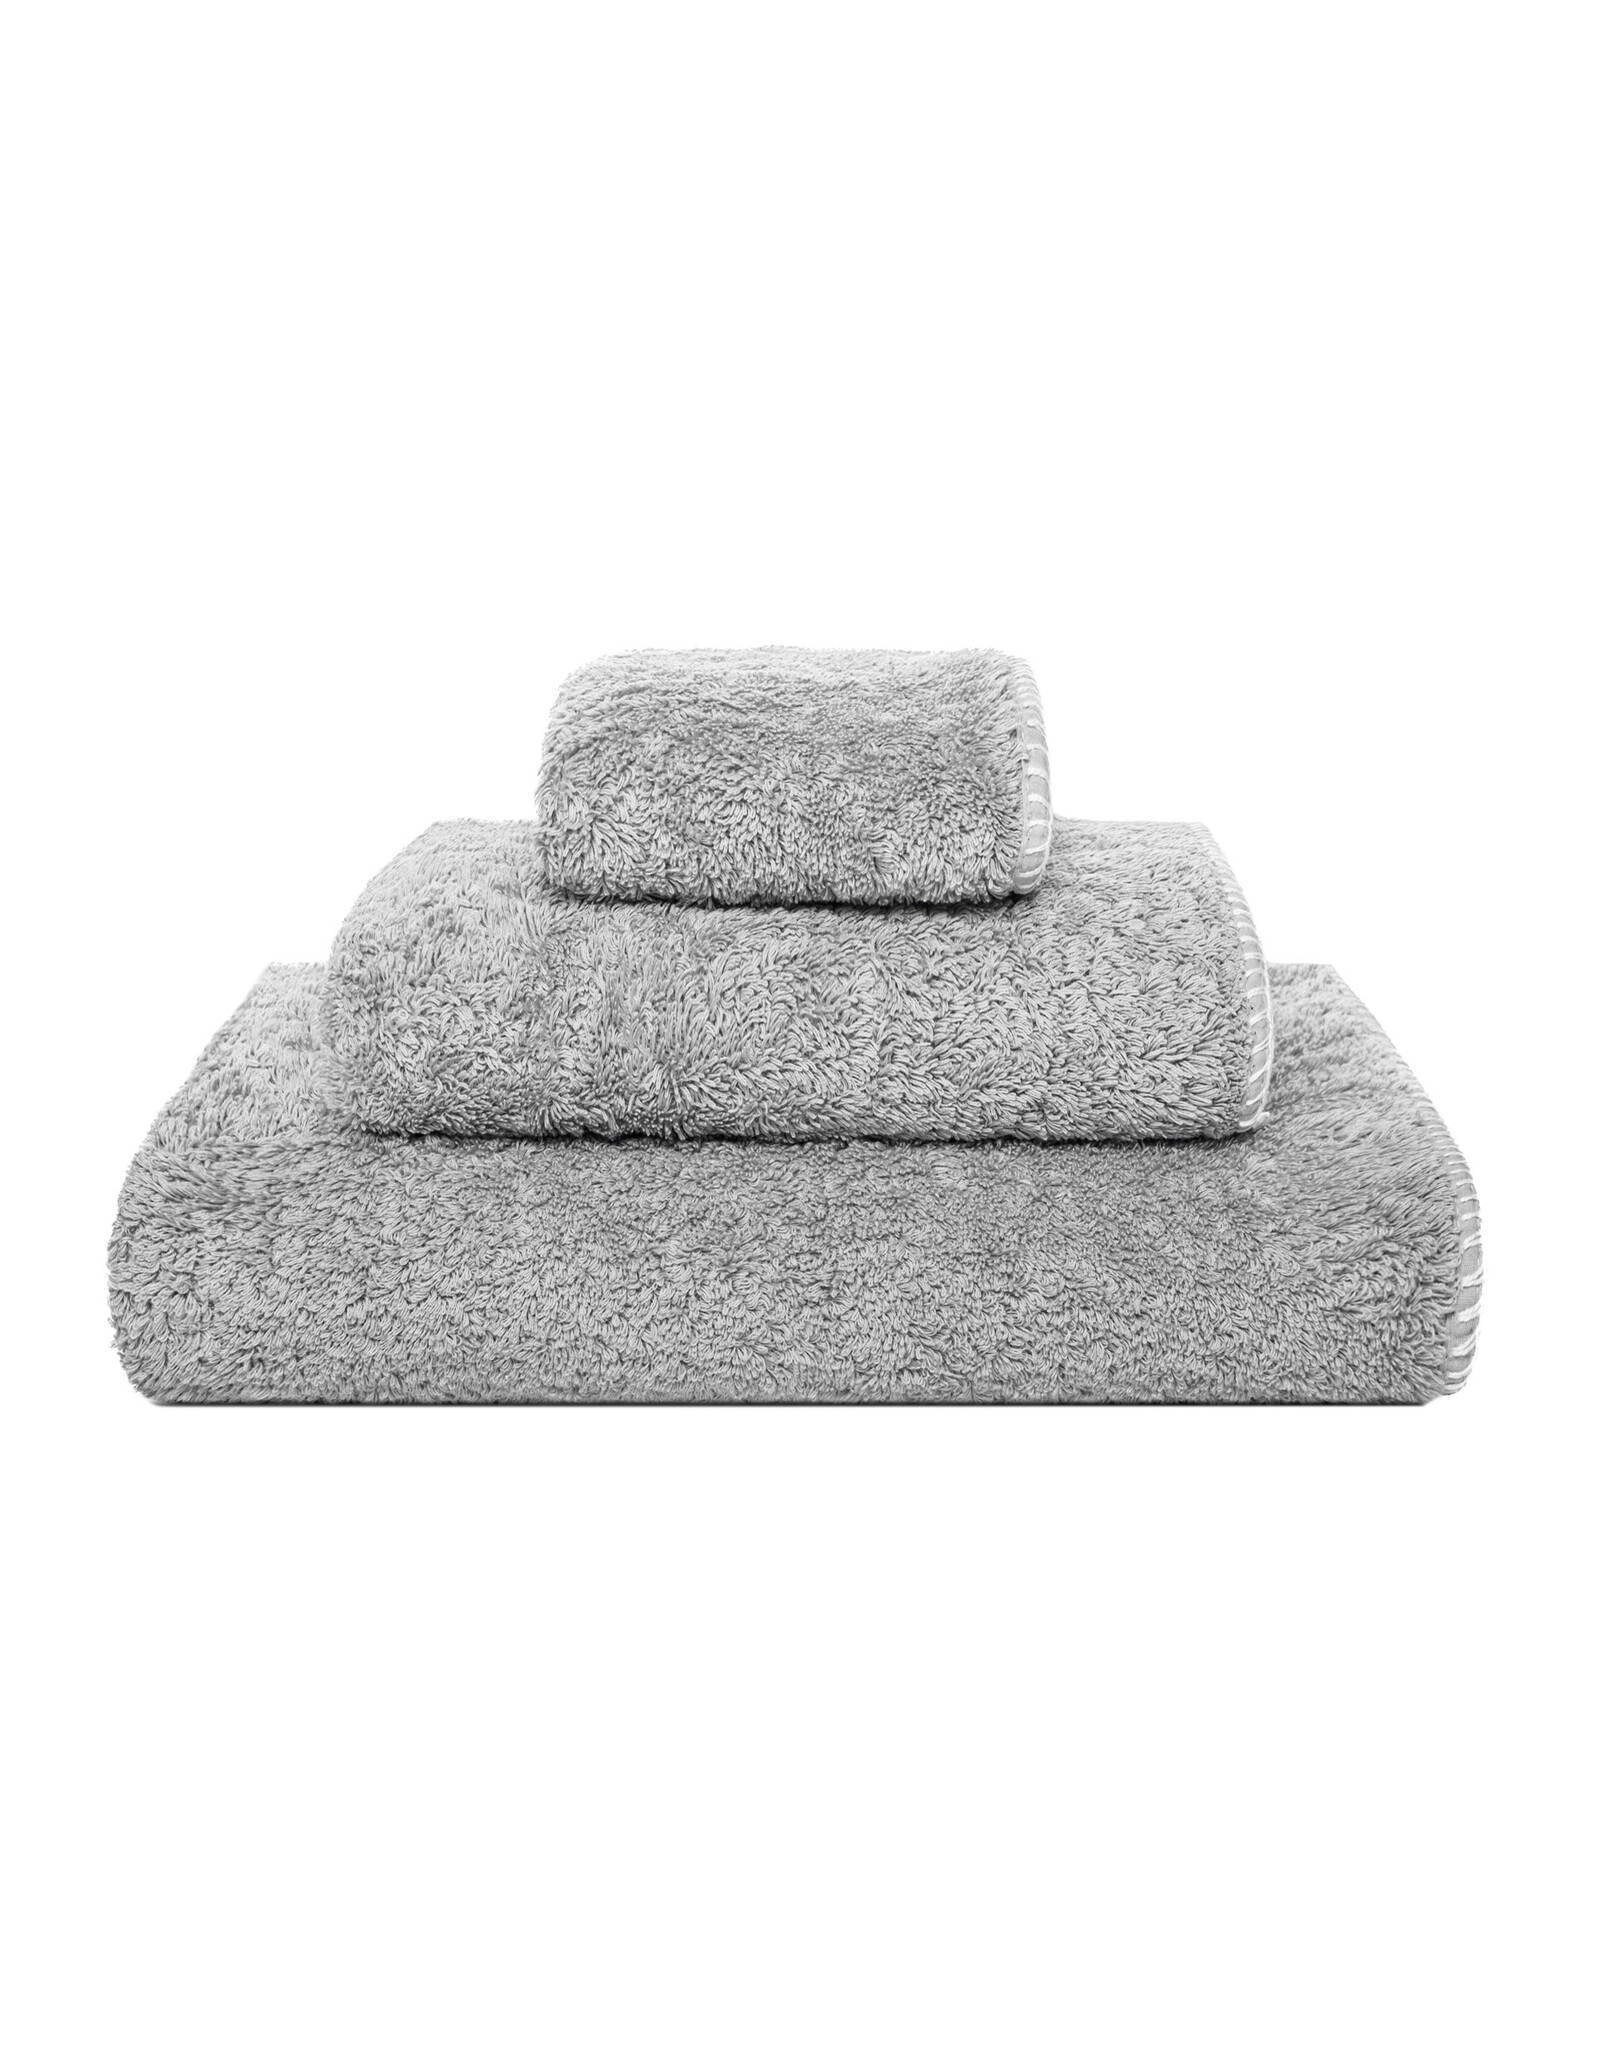 Evora White / Silver Bath Towel 28x55 Custom